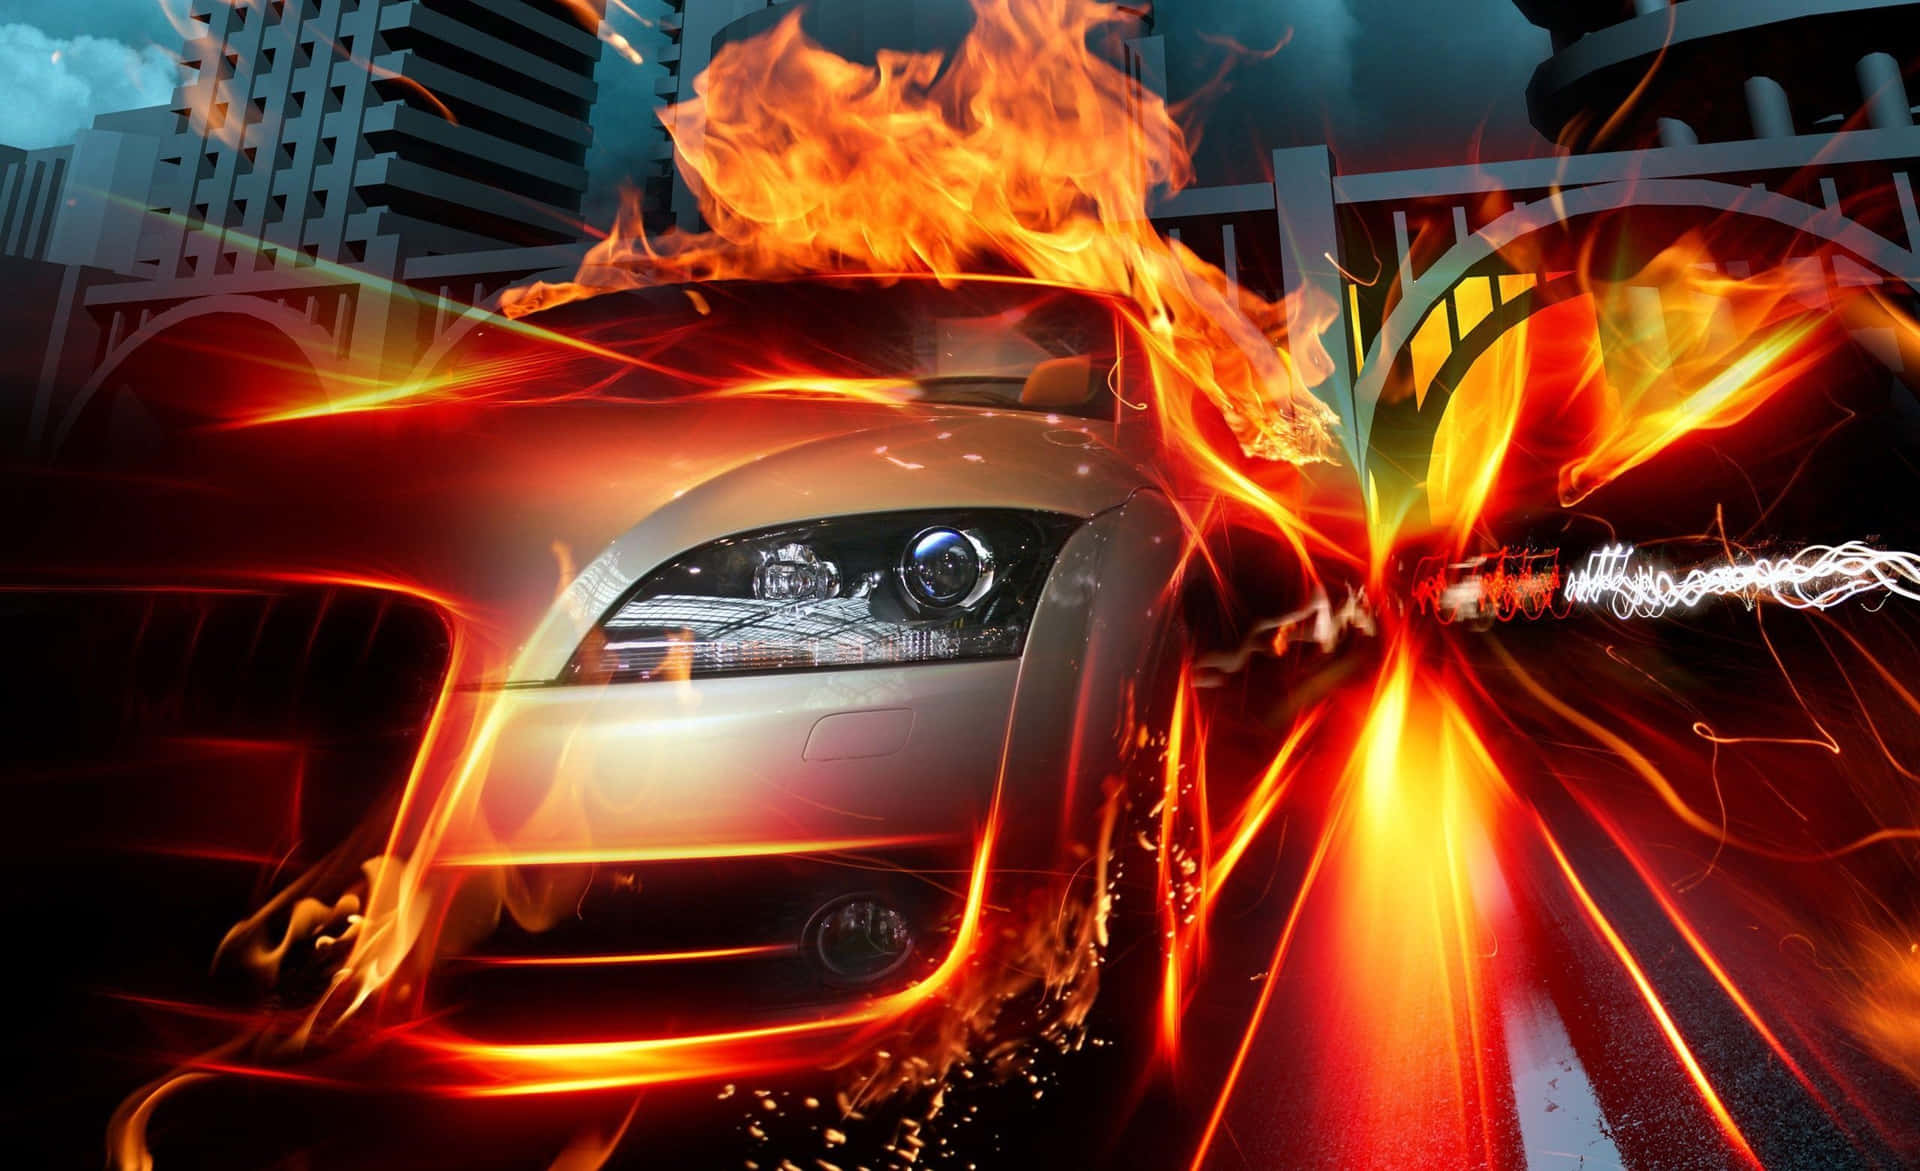 Flaming Speed Car Artwork Wallpaper